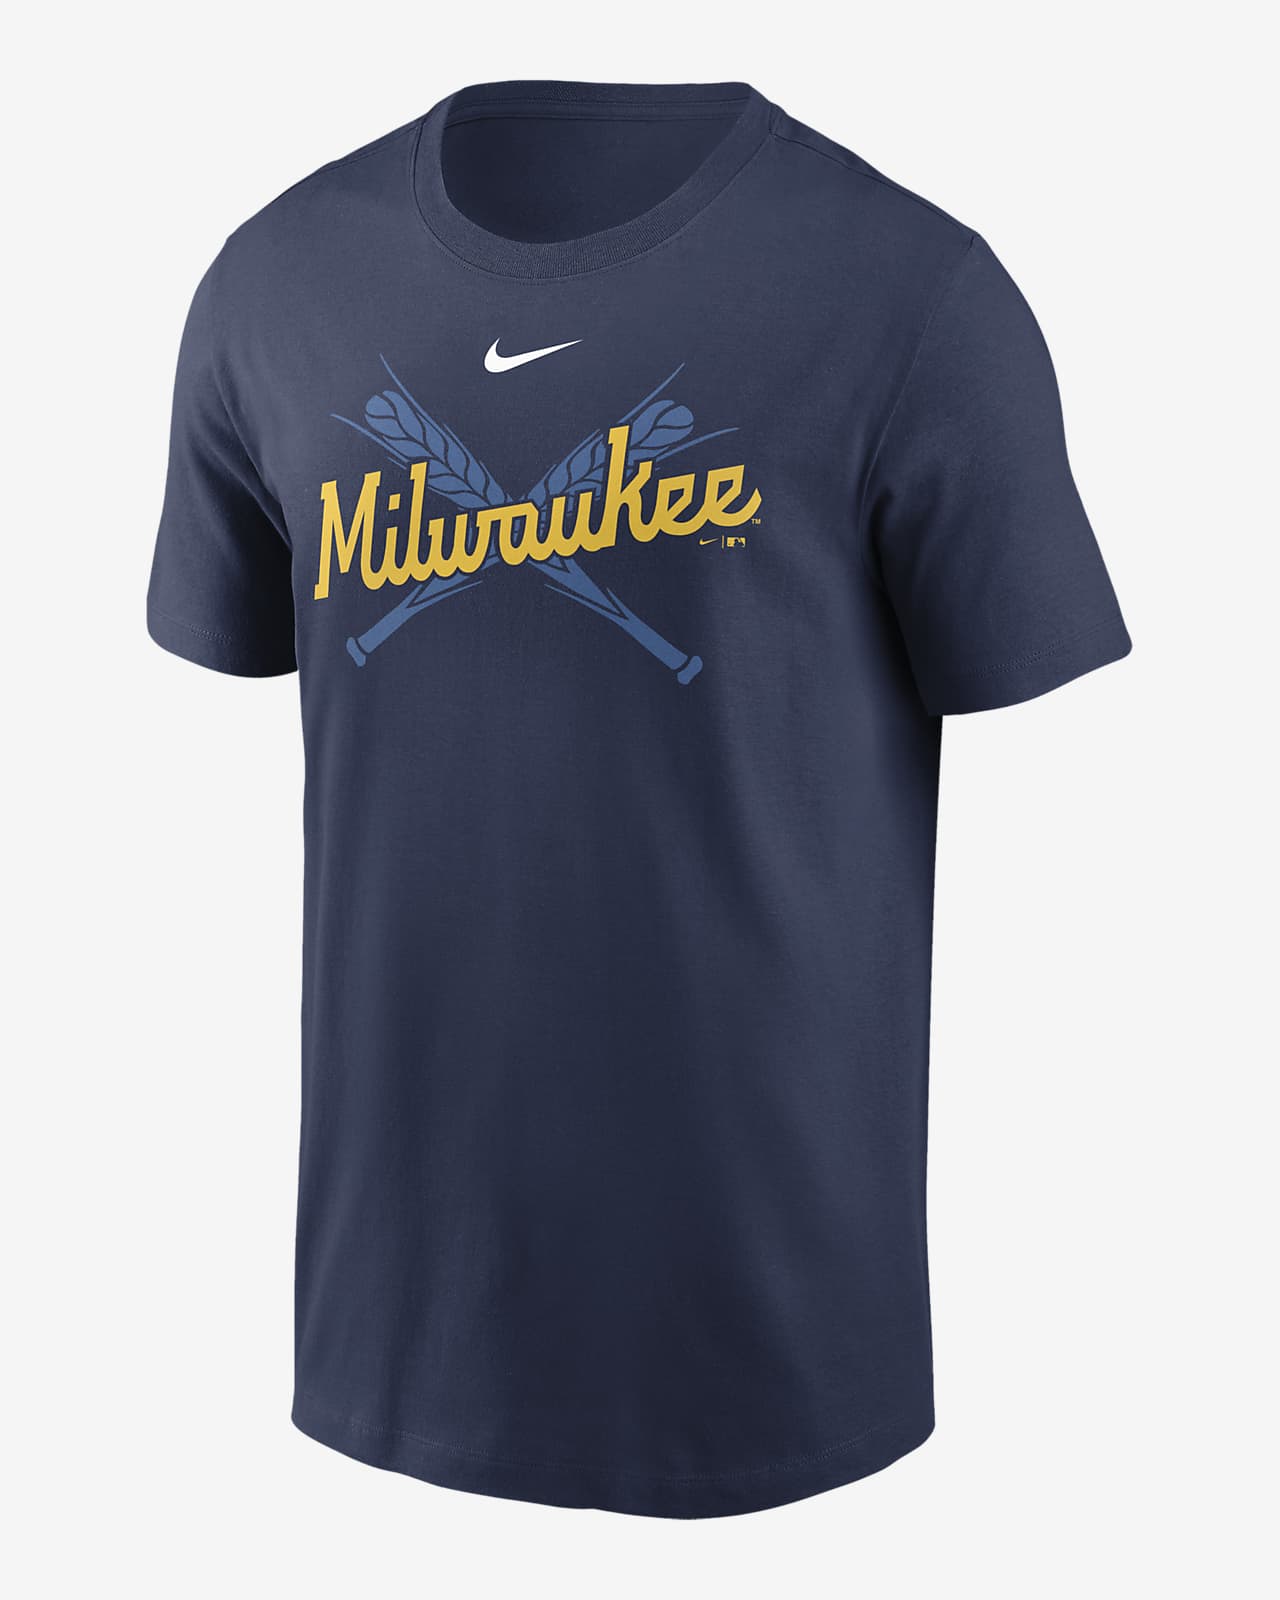 Nike Local (MLB Milwaukee Brewers) Men's T-Shirt